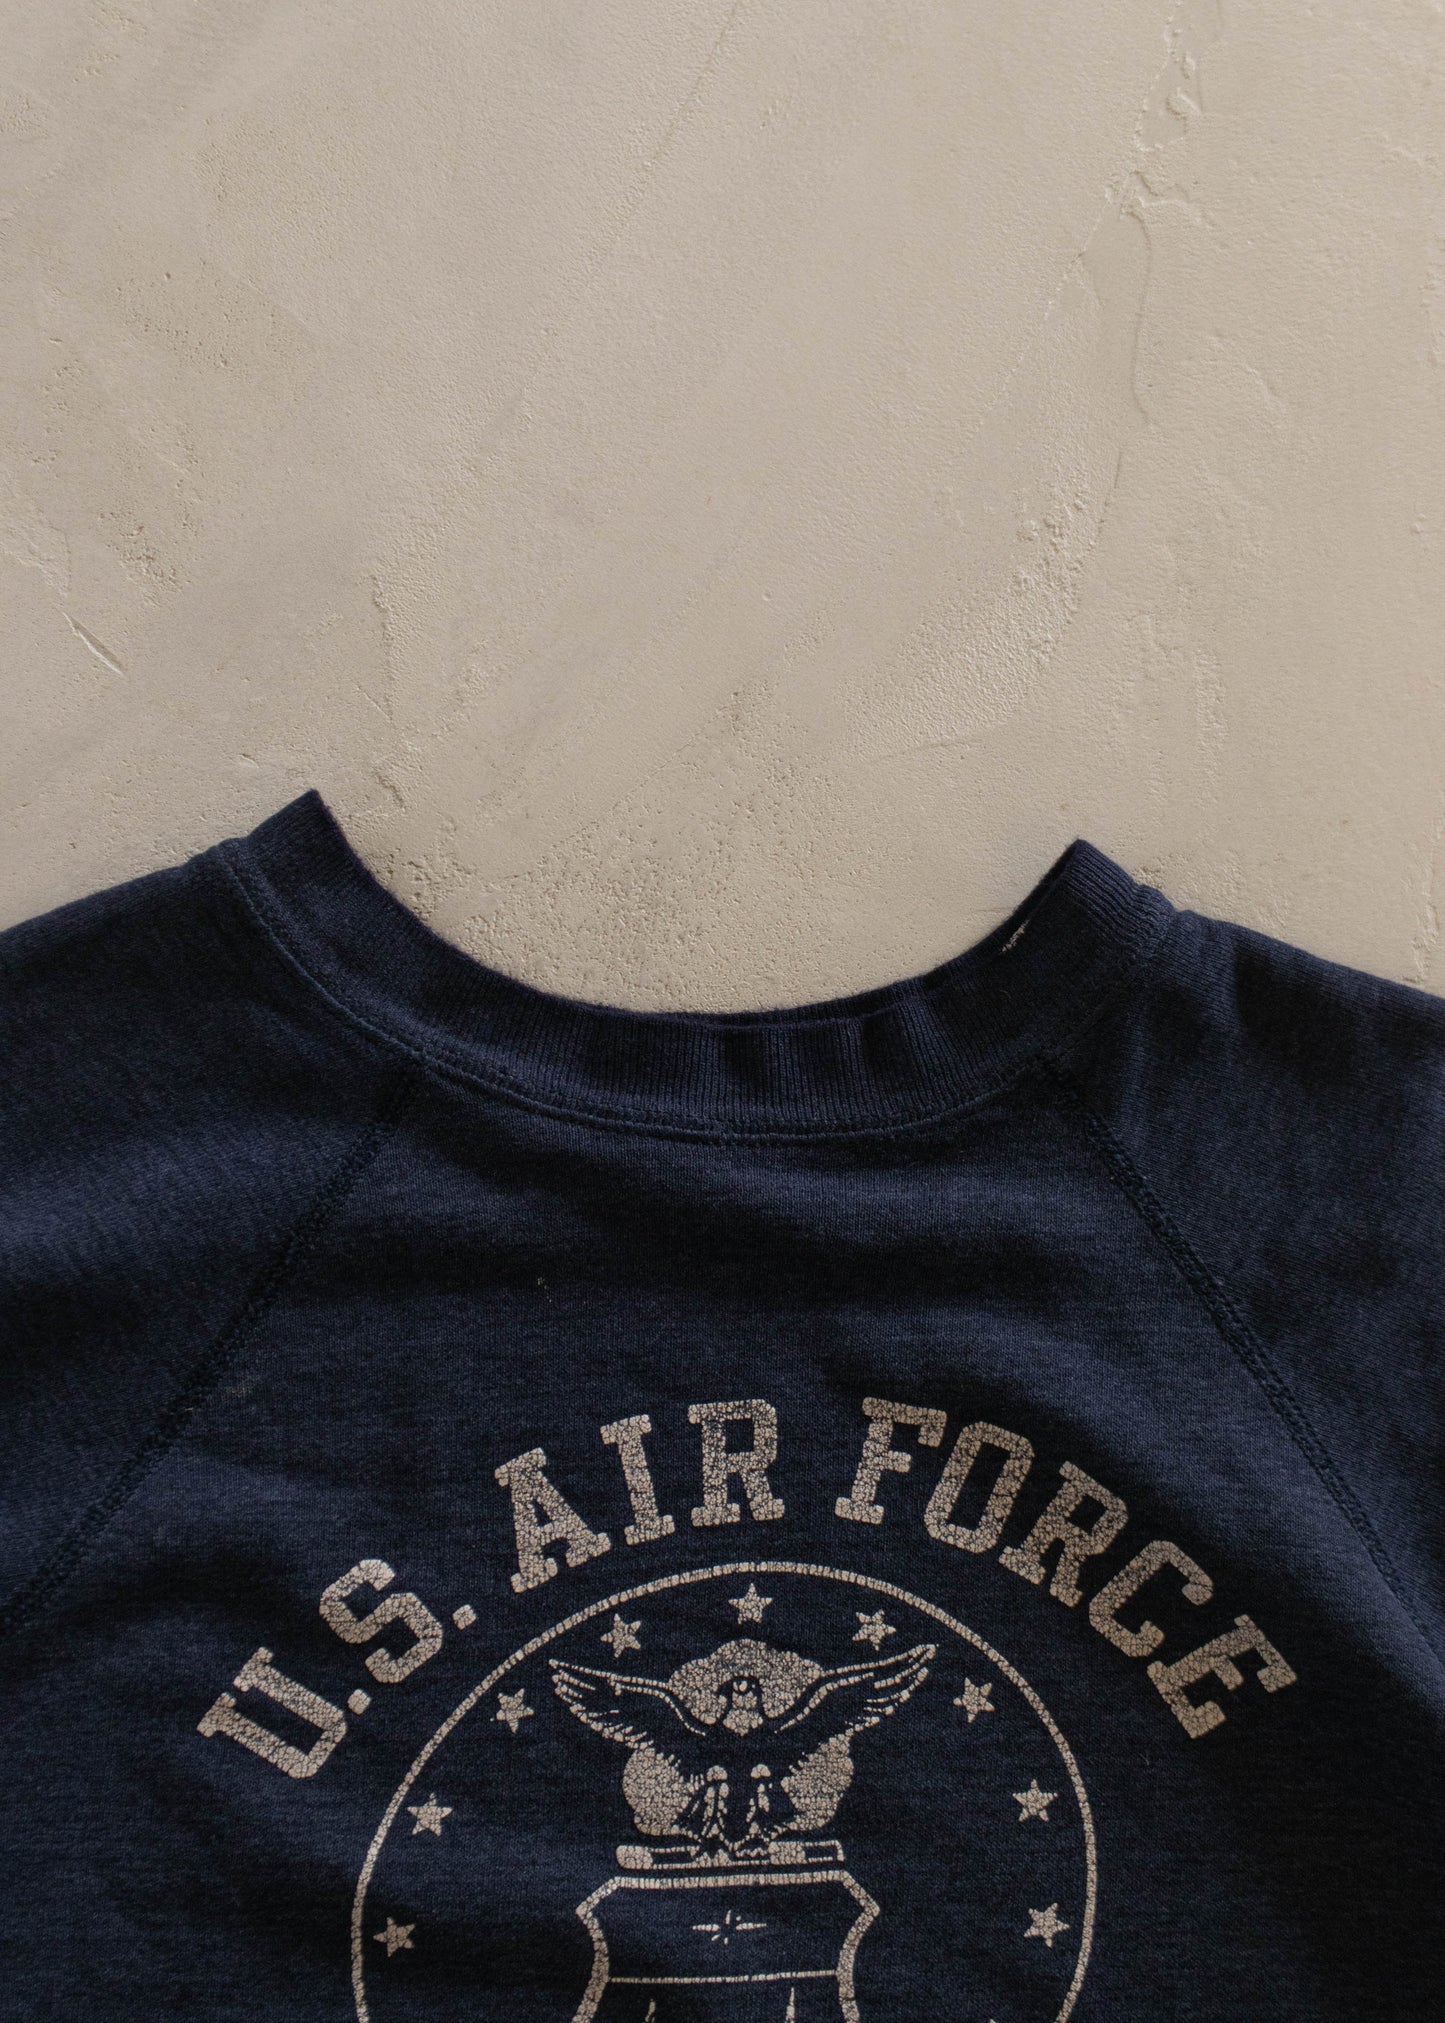 1980s U.S Airforce Raglan Sweatshirt Size XS/S